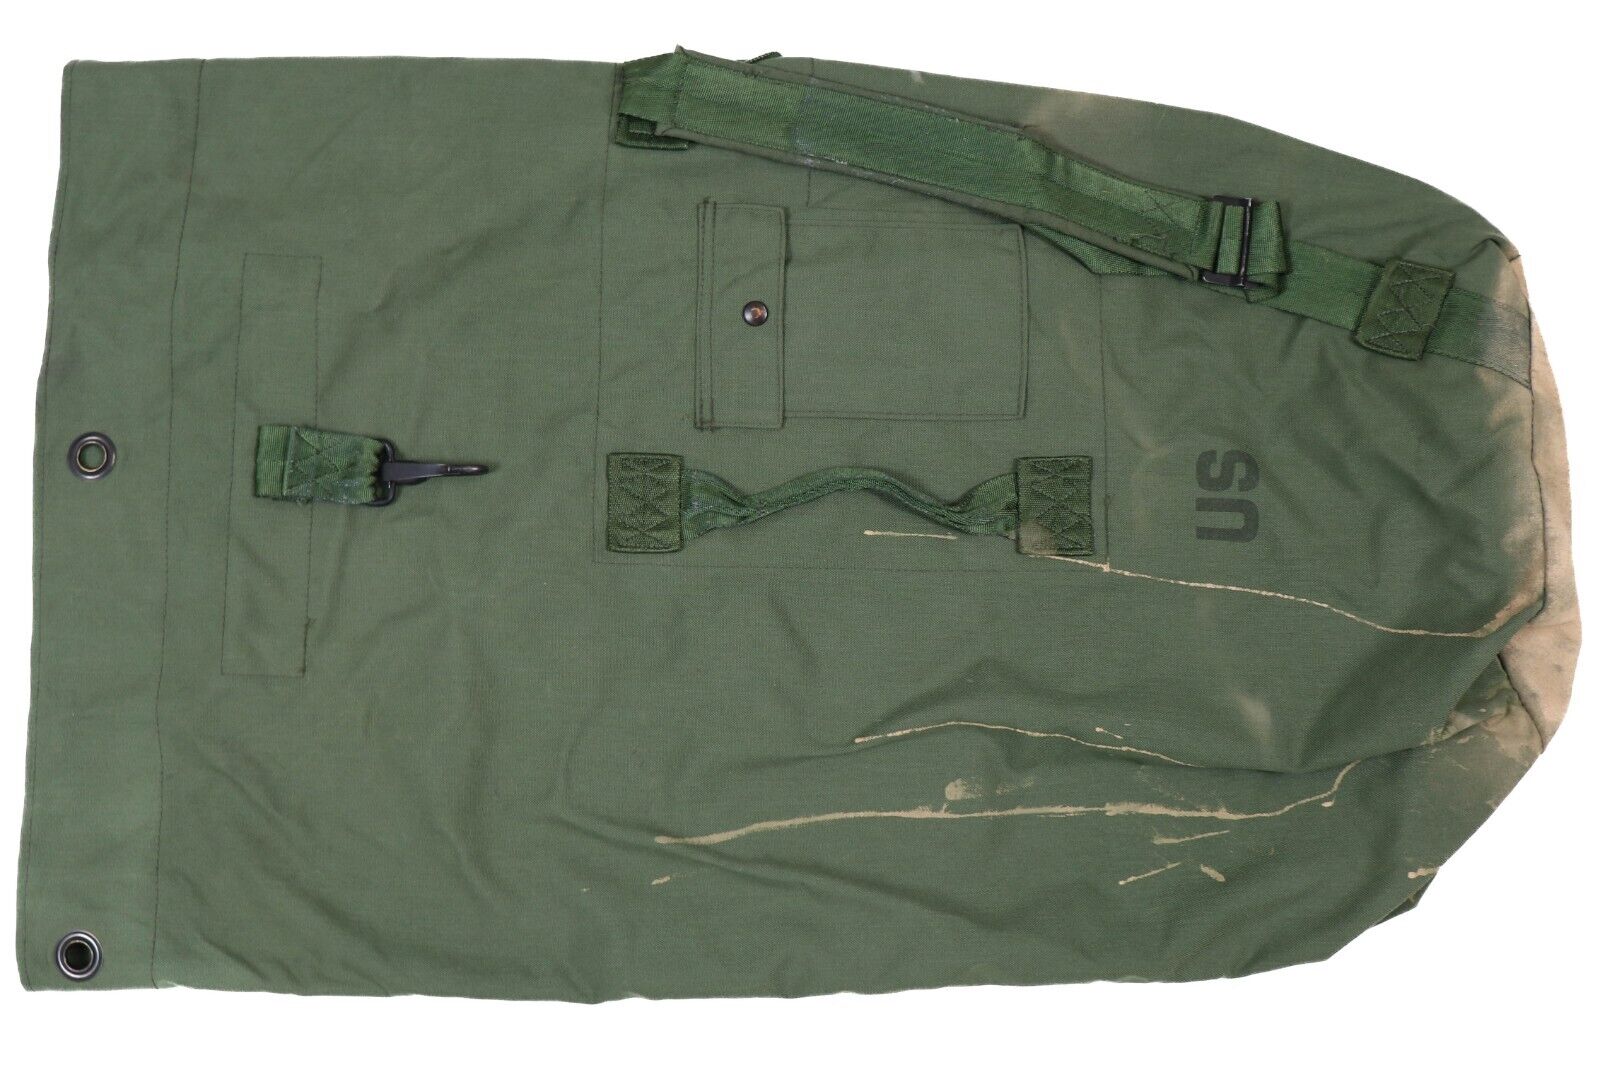 Top Loading Military Duffle Bag US Army Sea Bag Sack Deployment Pack OD Green